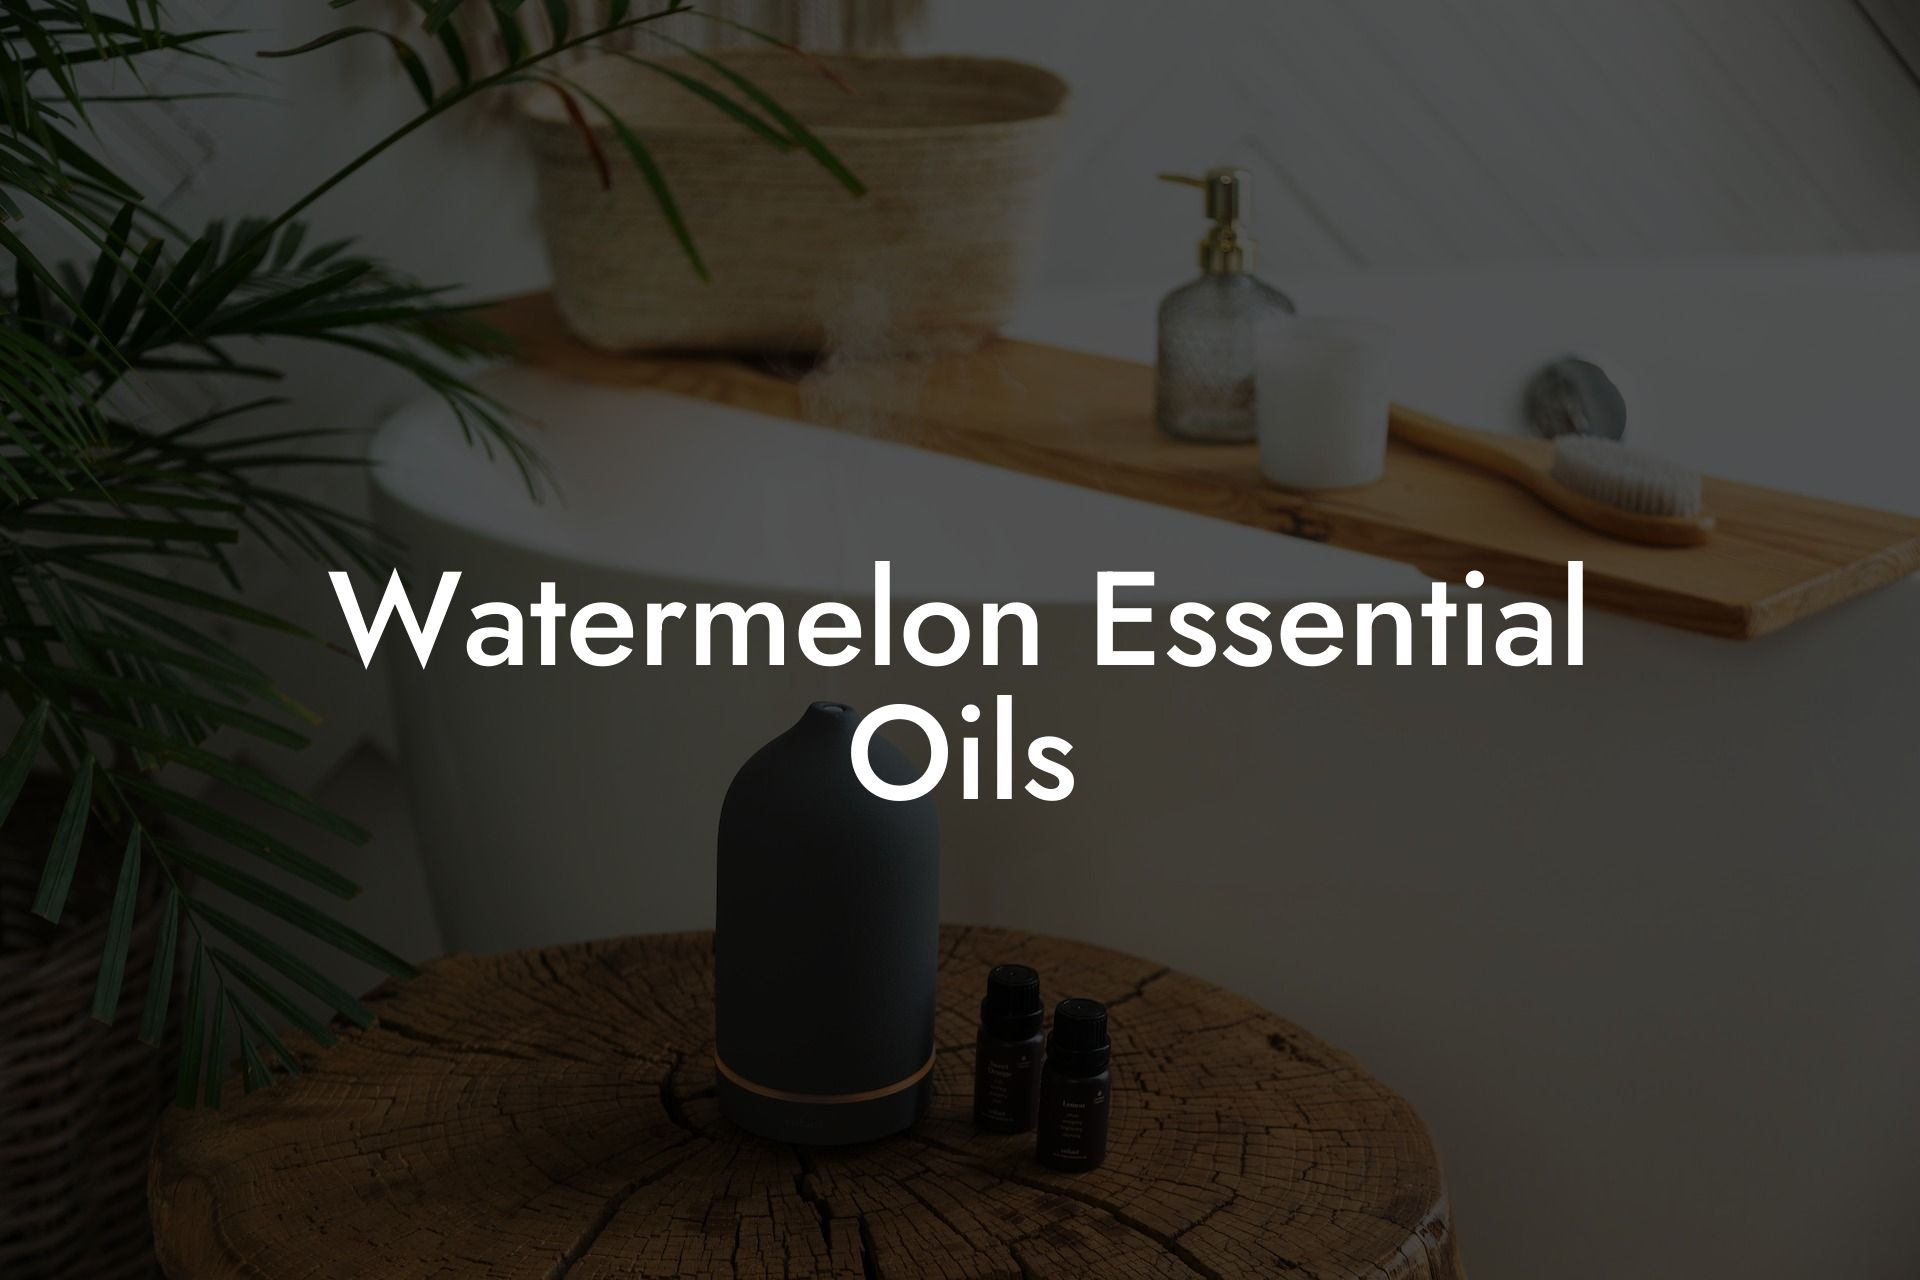 Watermelon Essential Oils